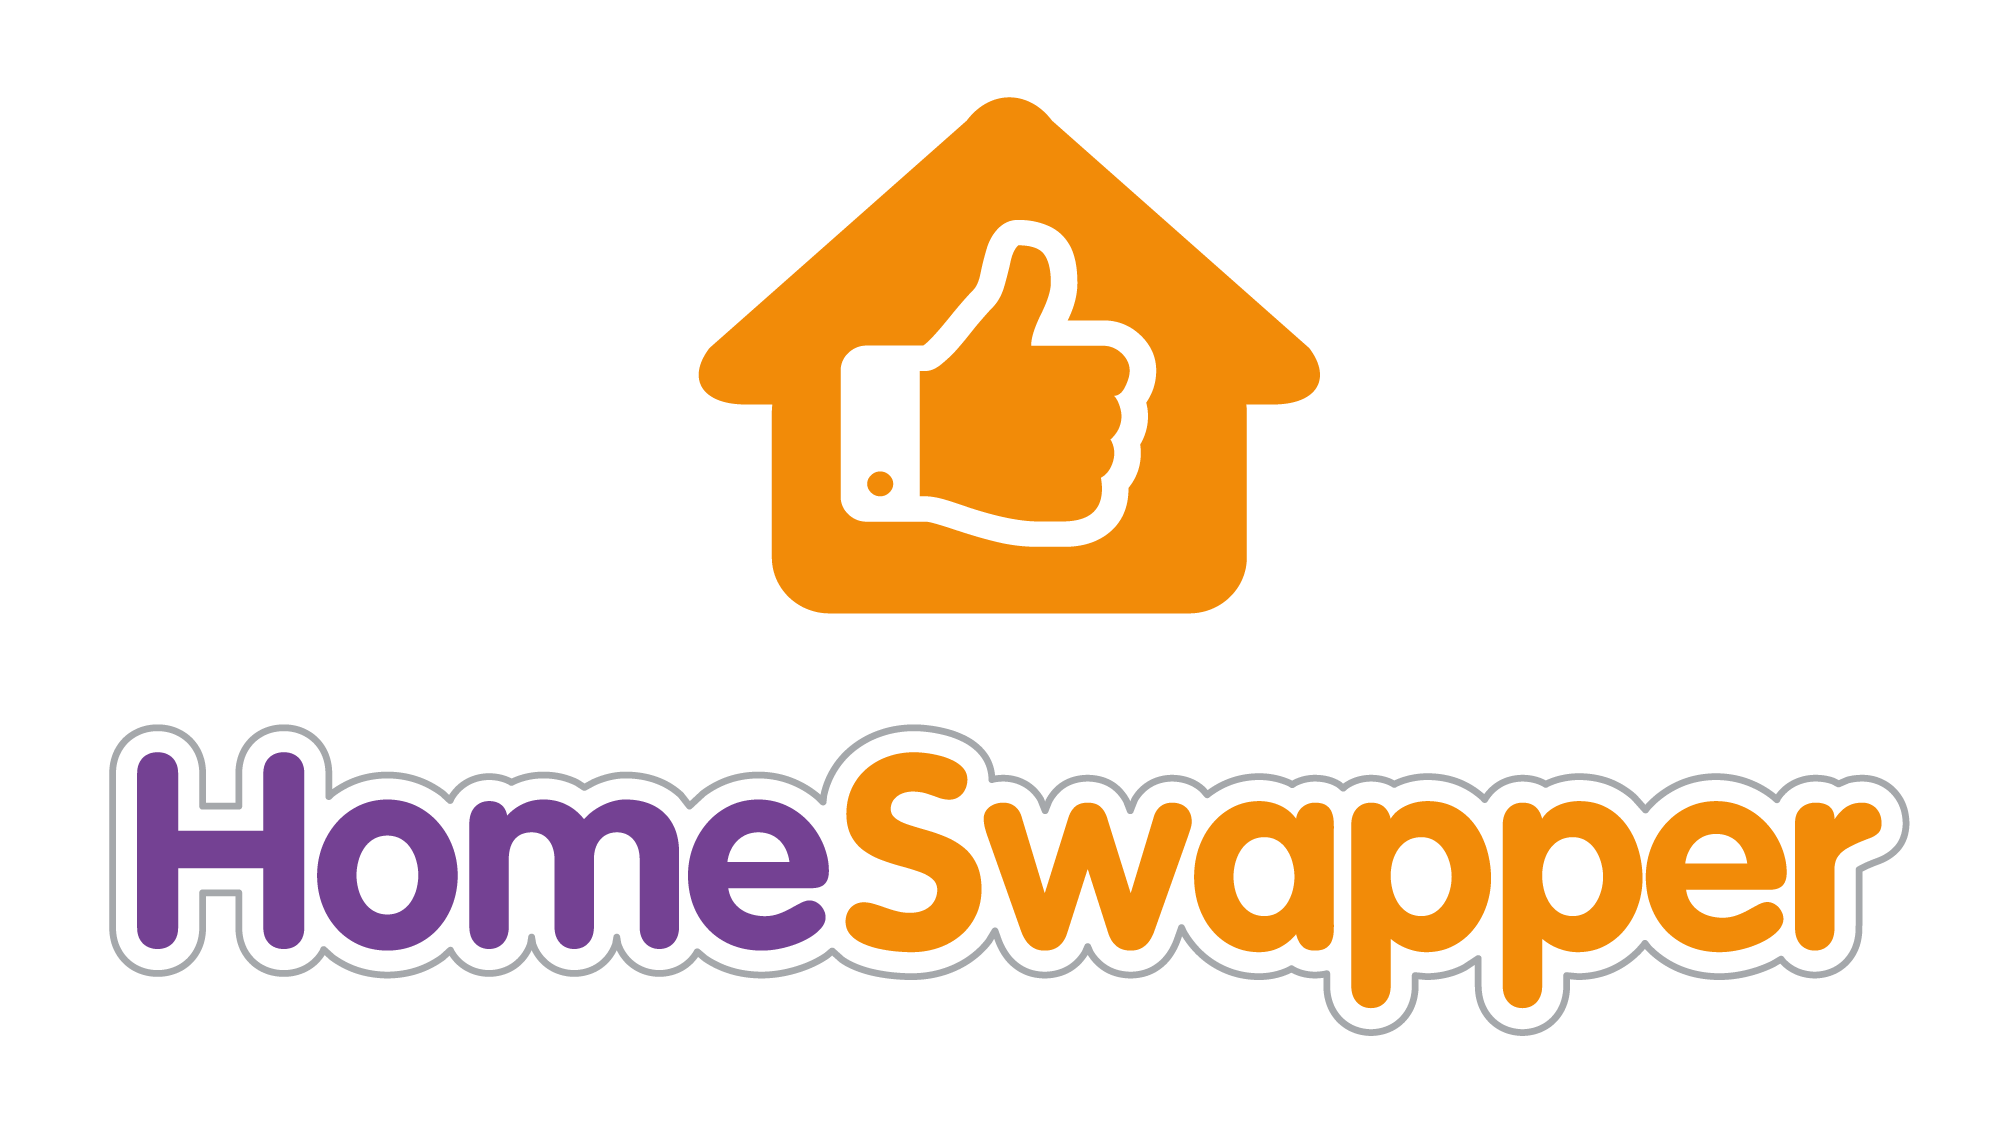 HomeSwapper logo